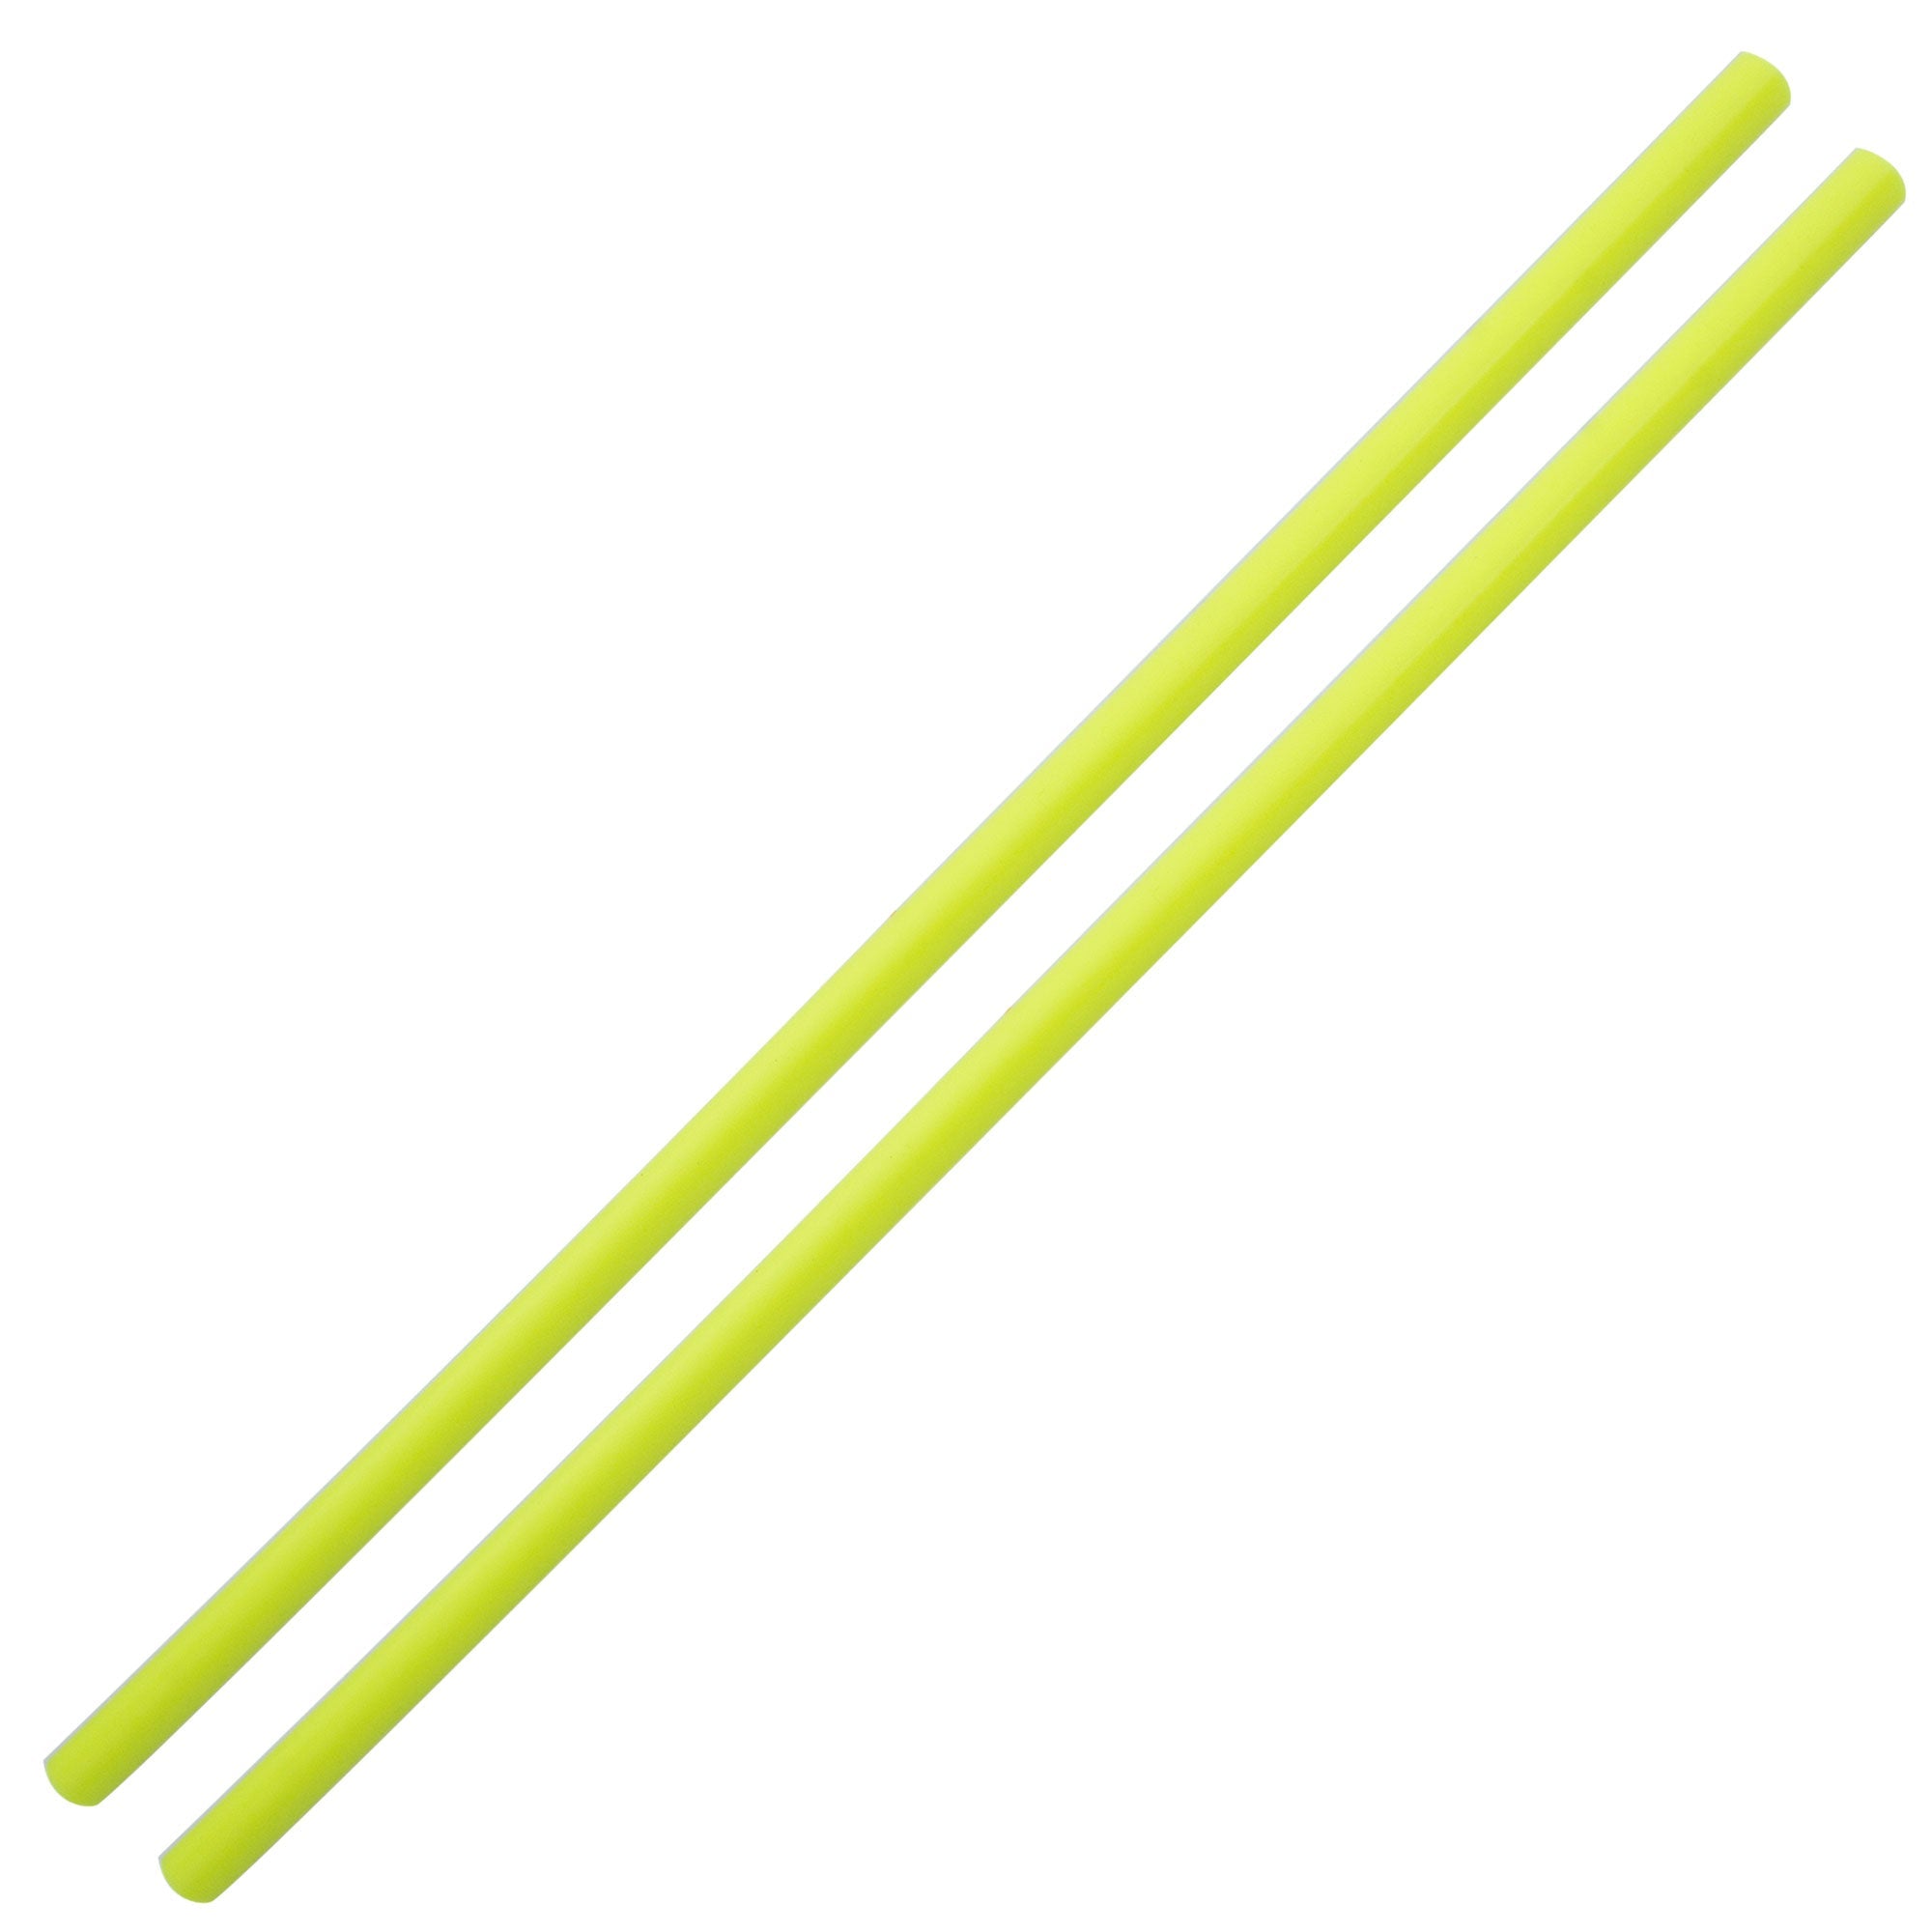 UV yellow silicone coated devil stick handsticks